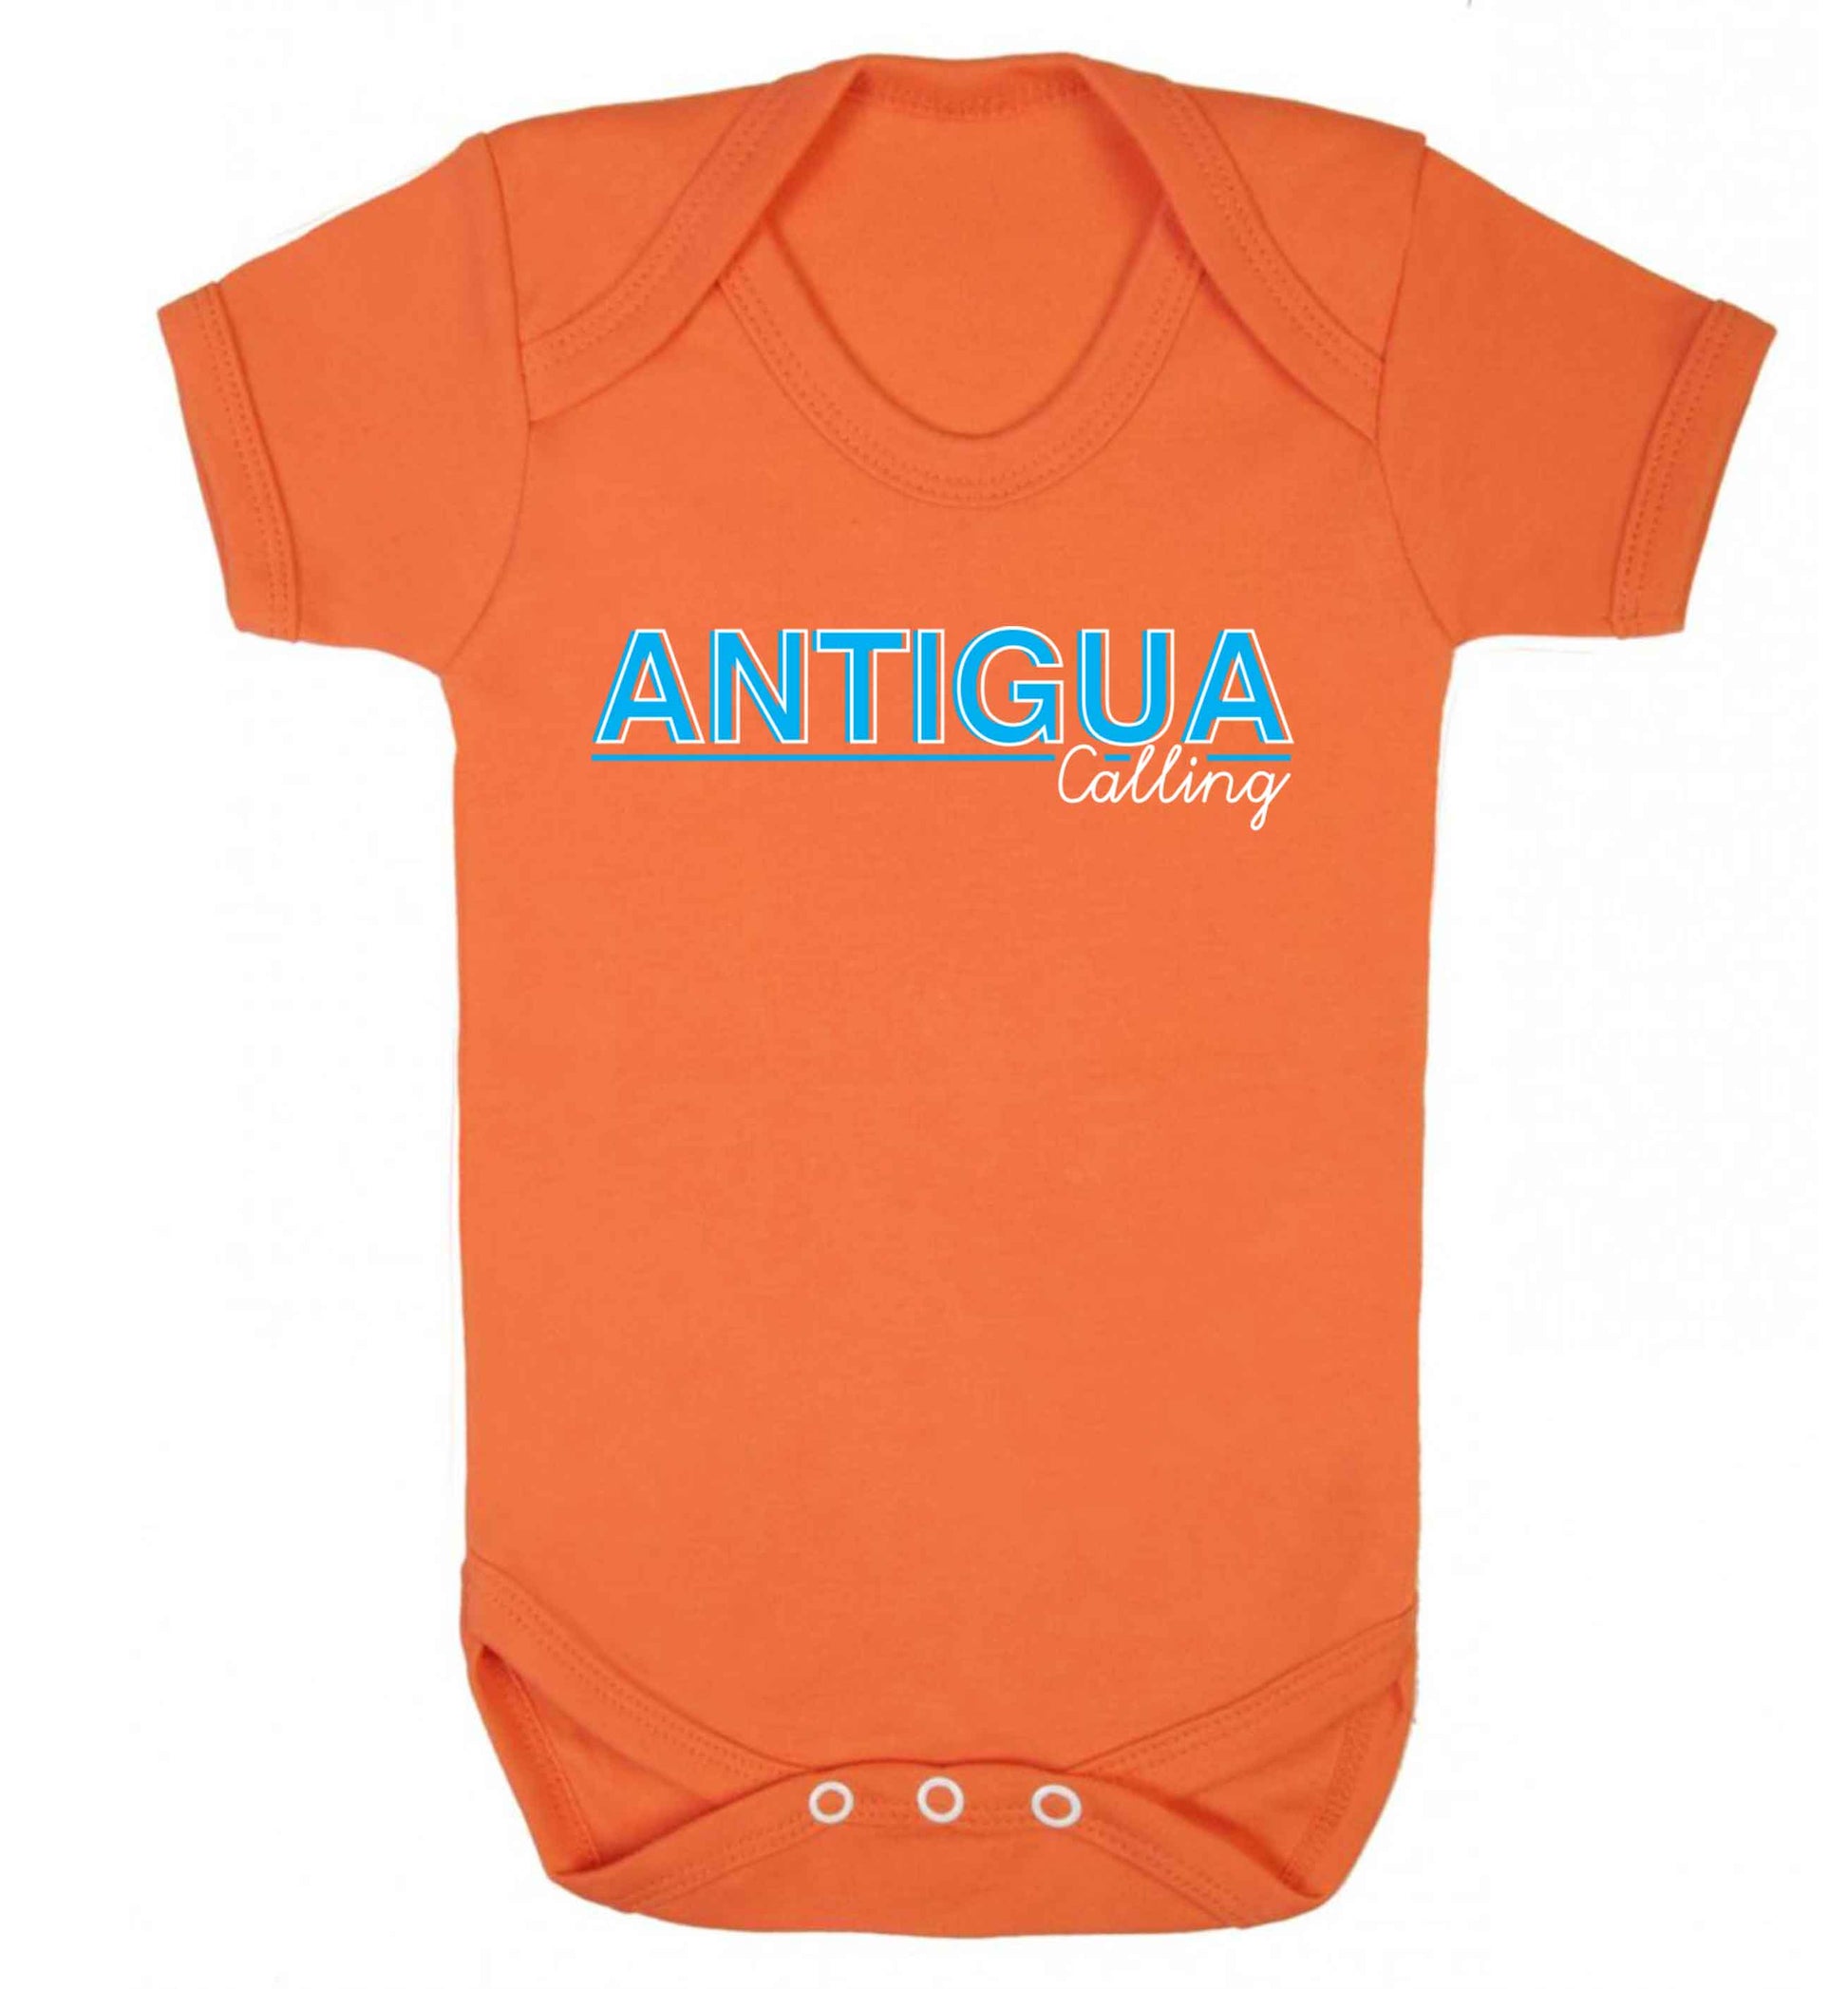 Antigua calling Baby Vest orange 18-24 months